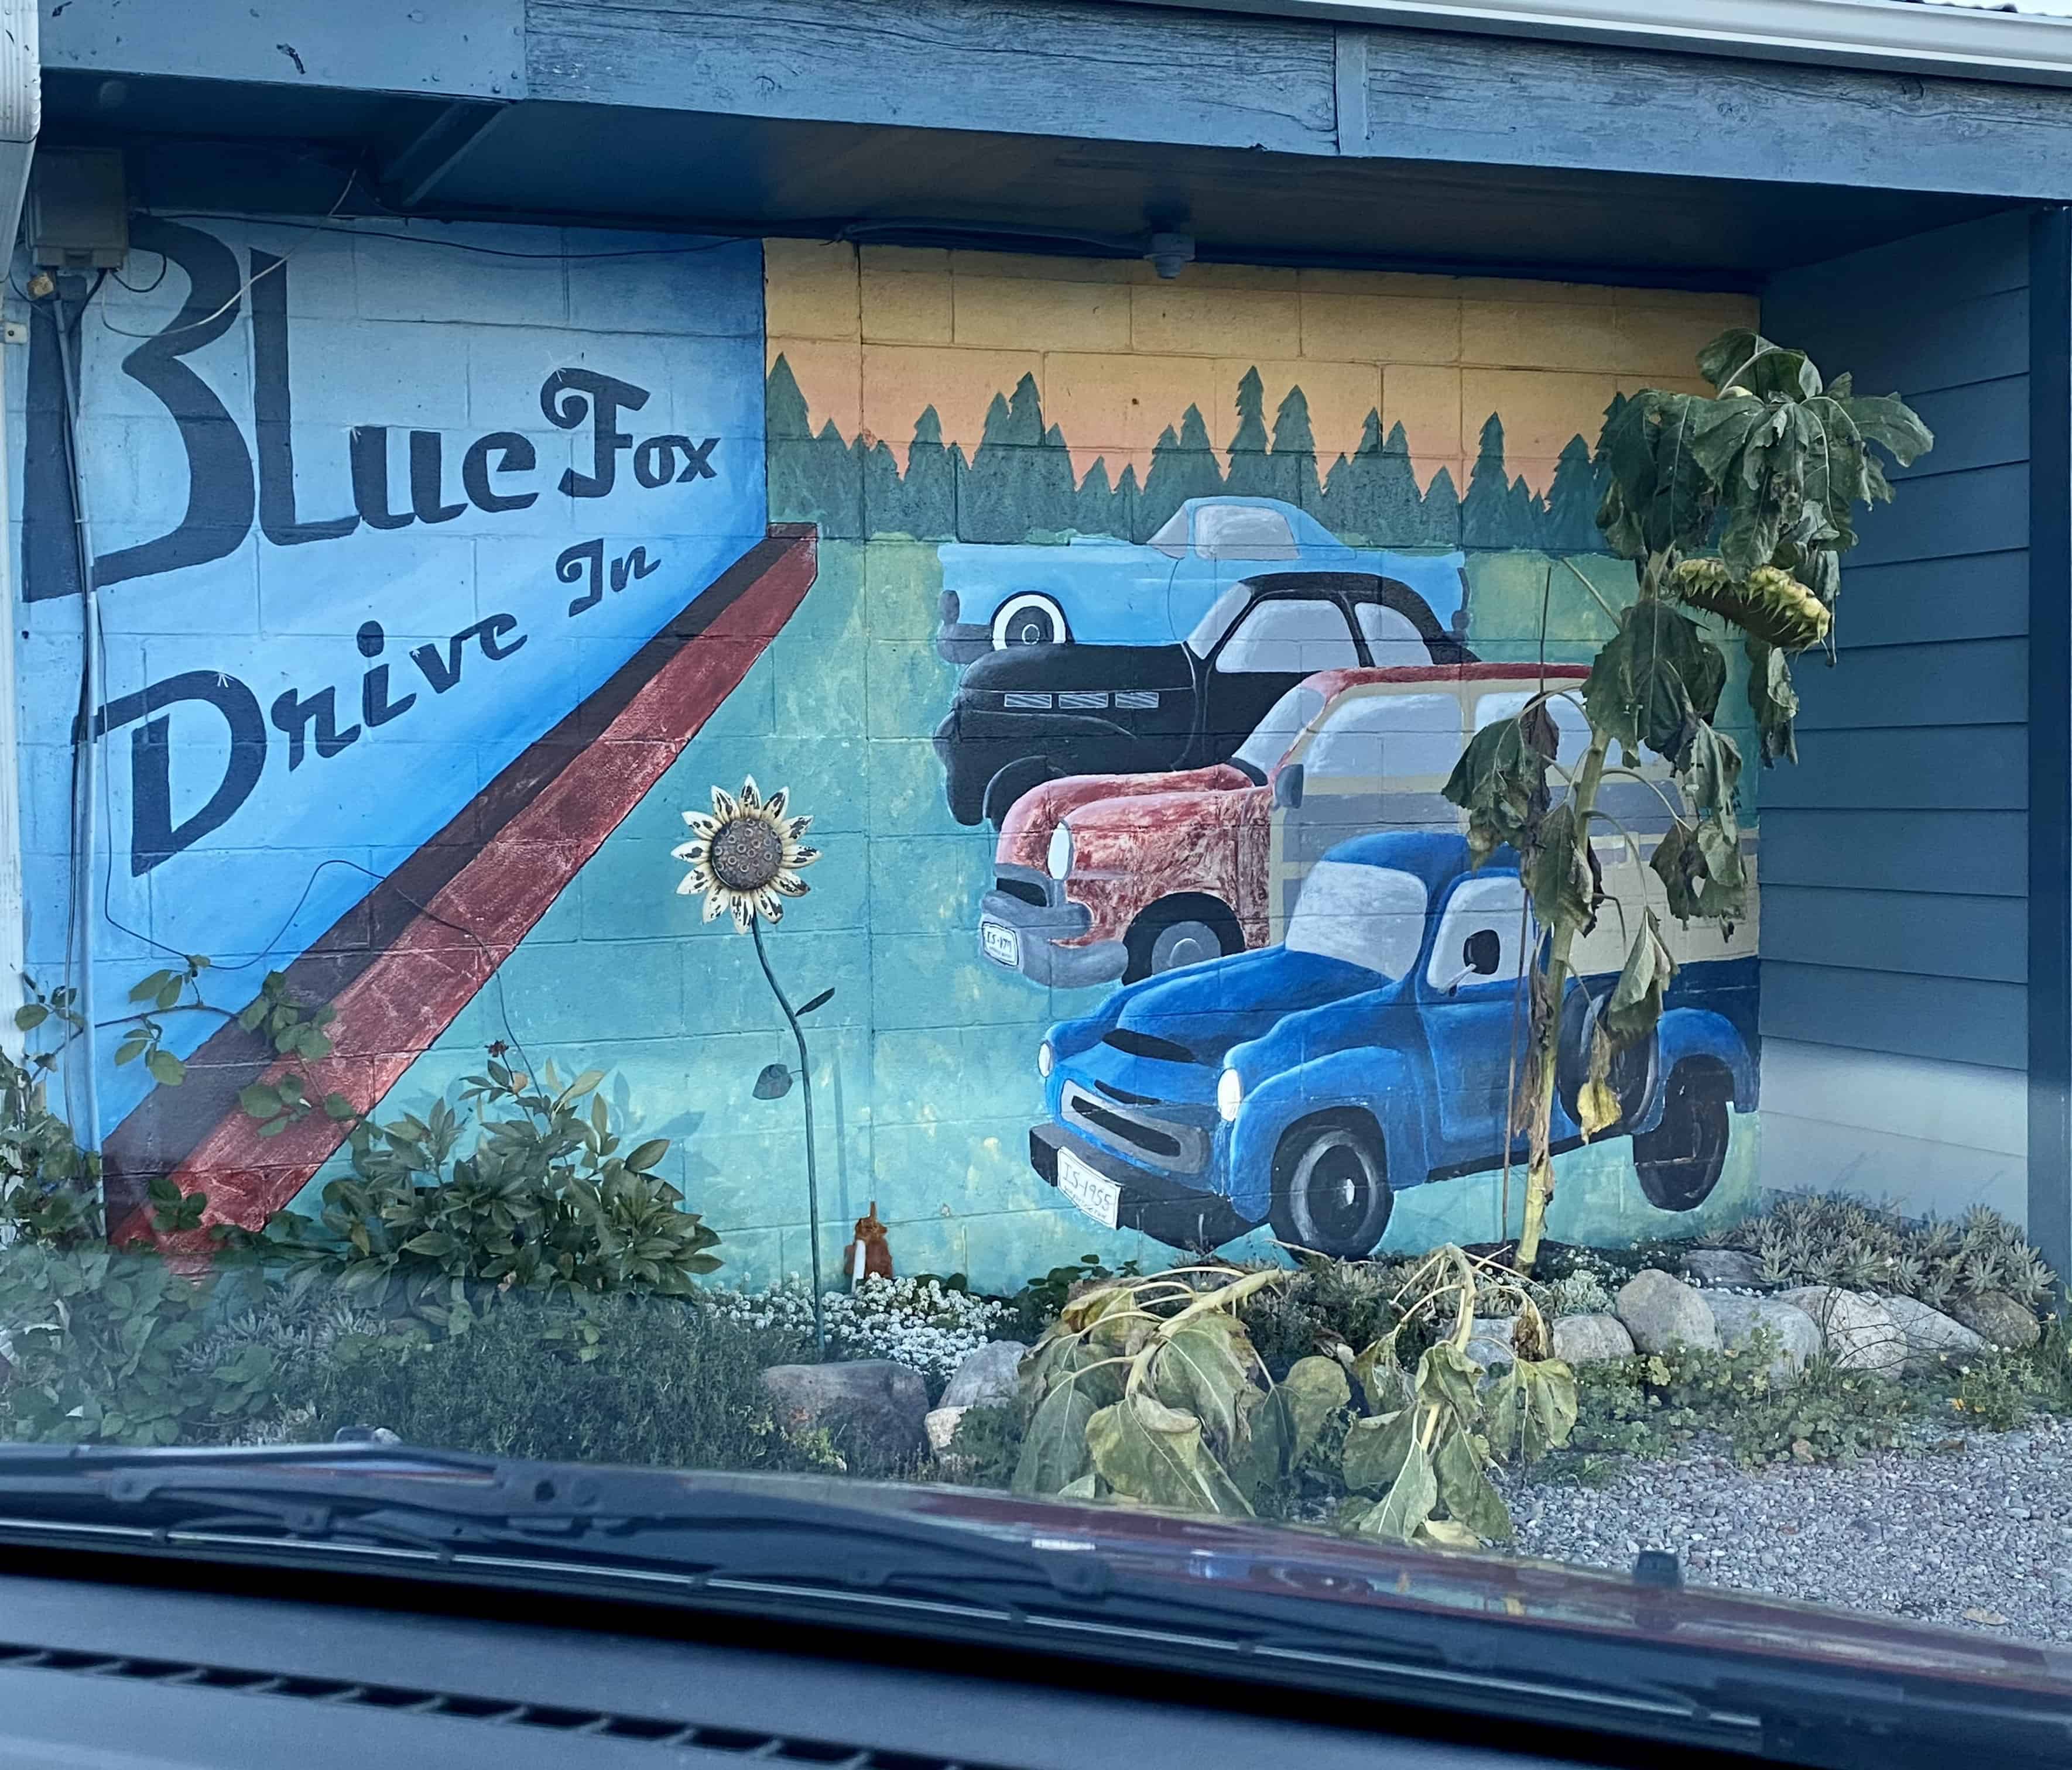 Blue Fox Drive-In Theater